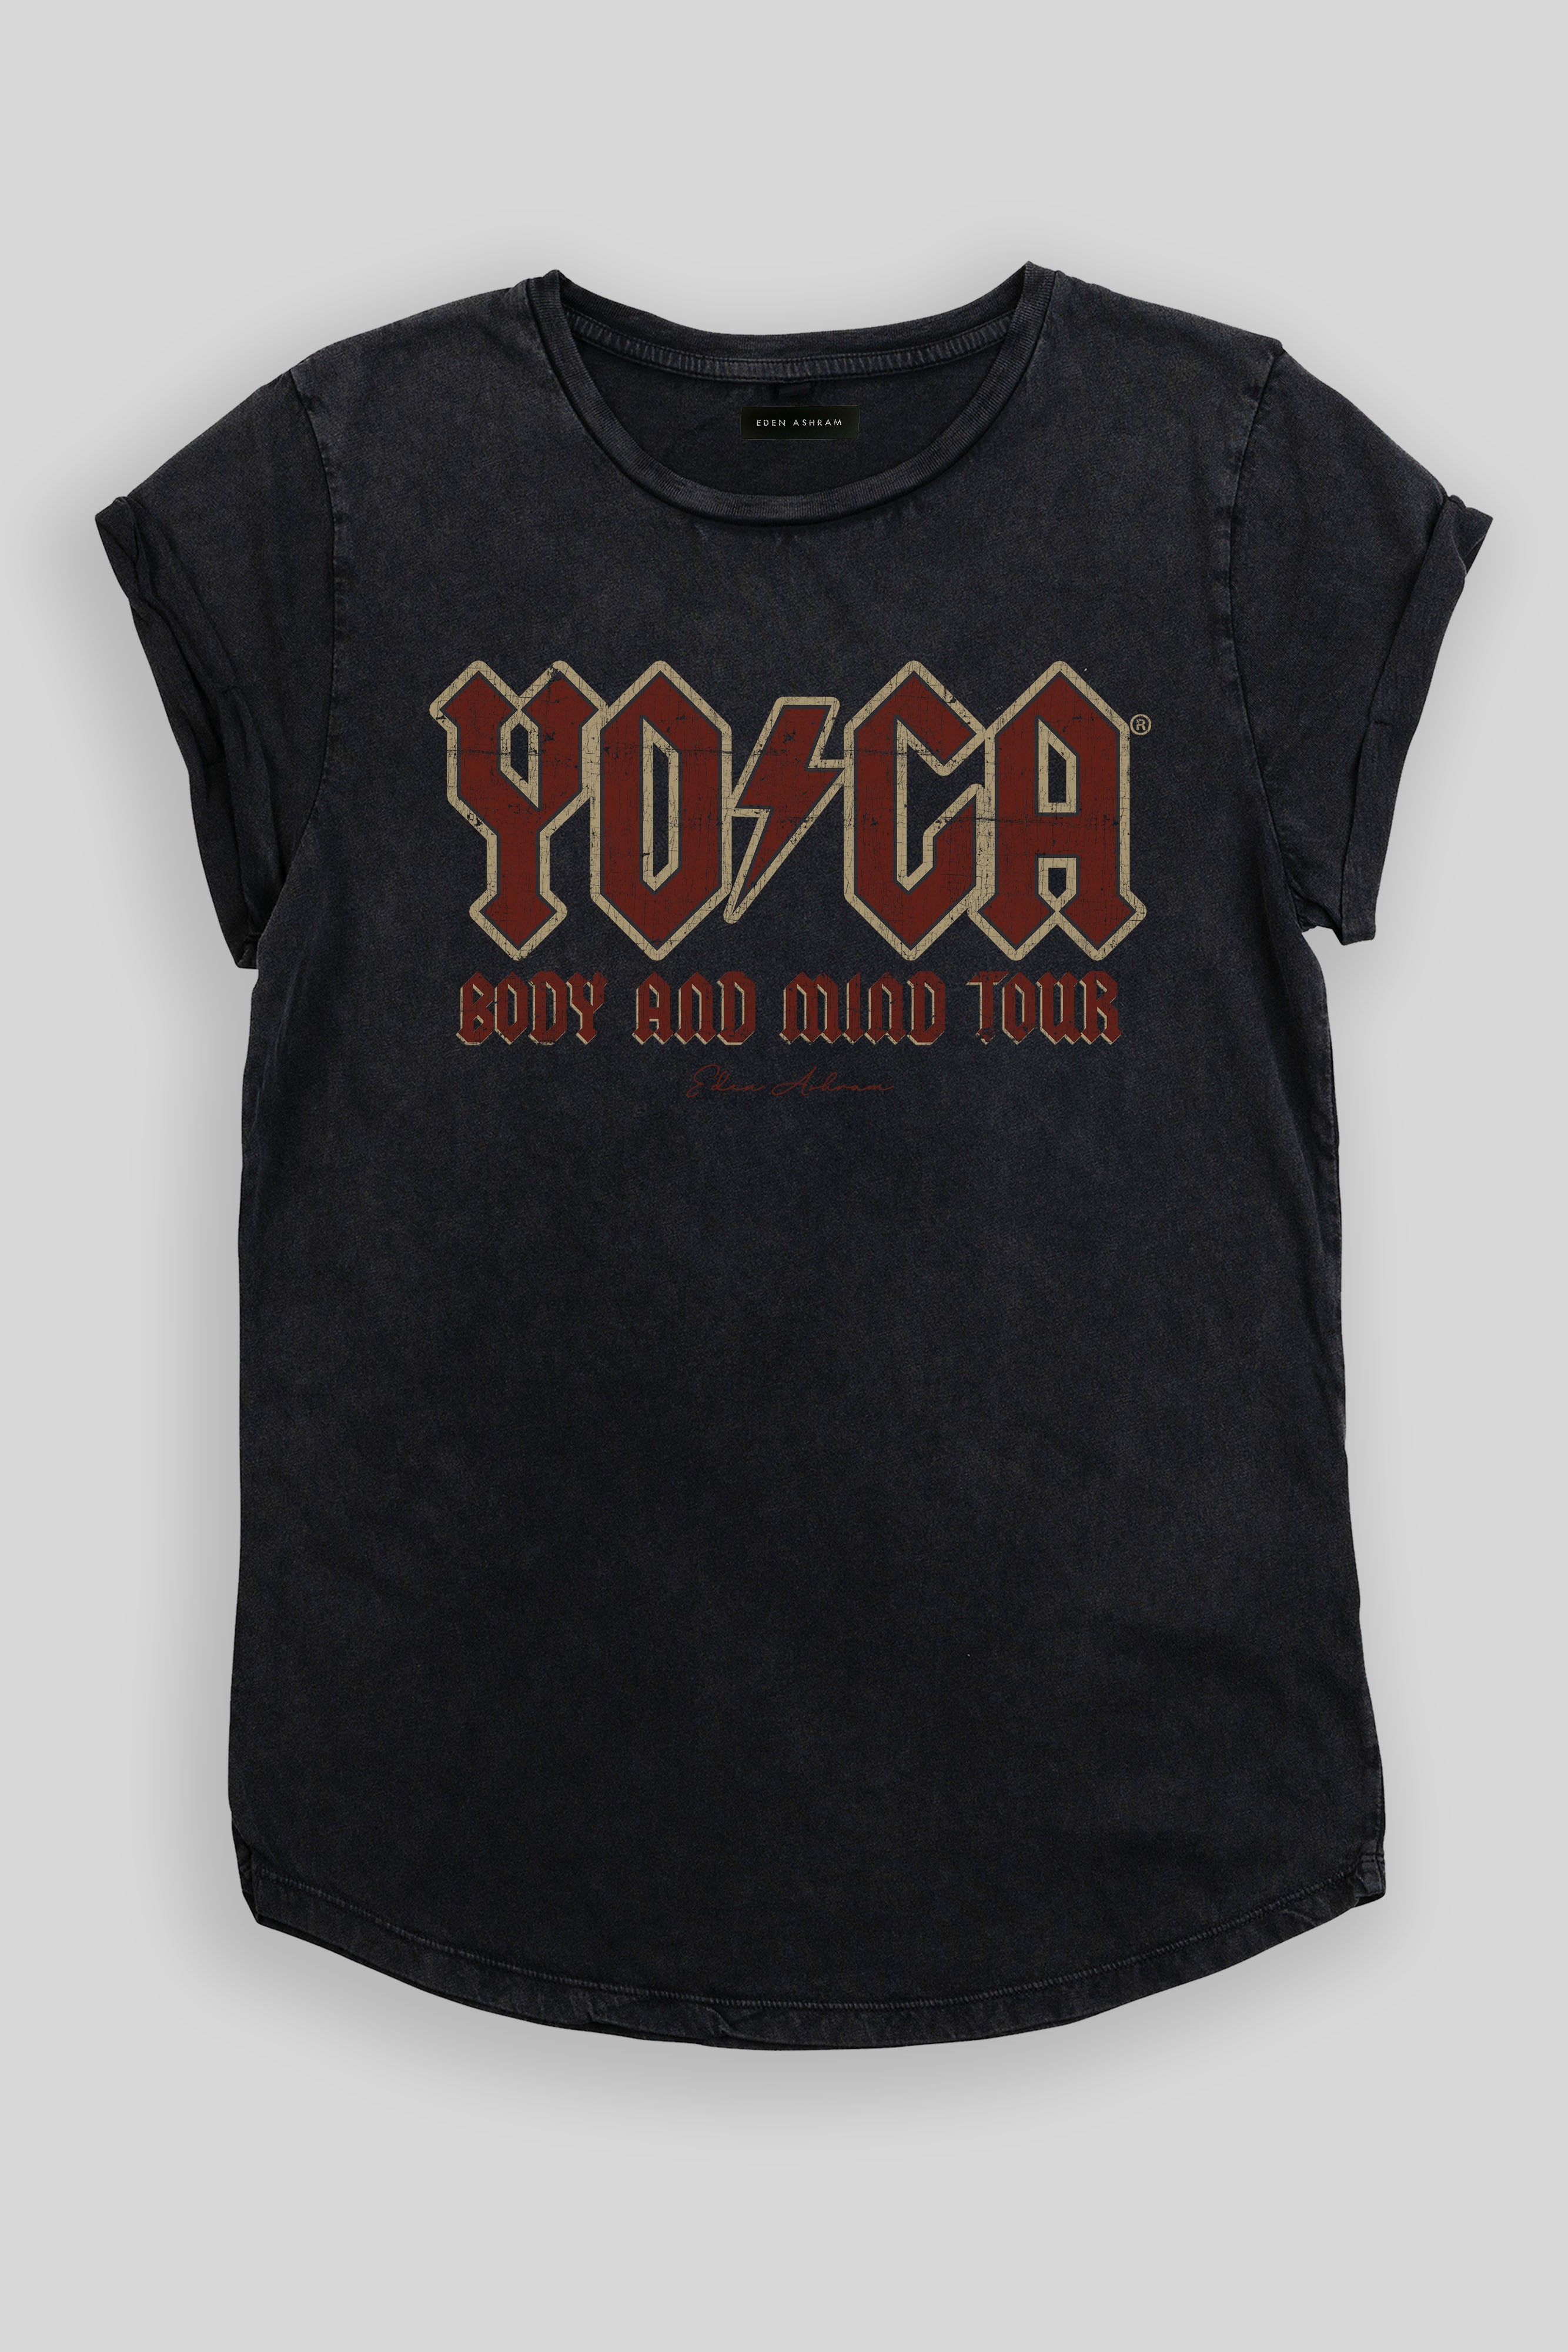 EDEN ASHRAM The Original YOGA Tour Premium Rolled Sleeve T-Shirt Stonewash Black